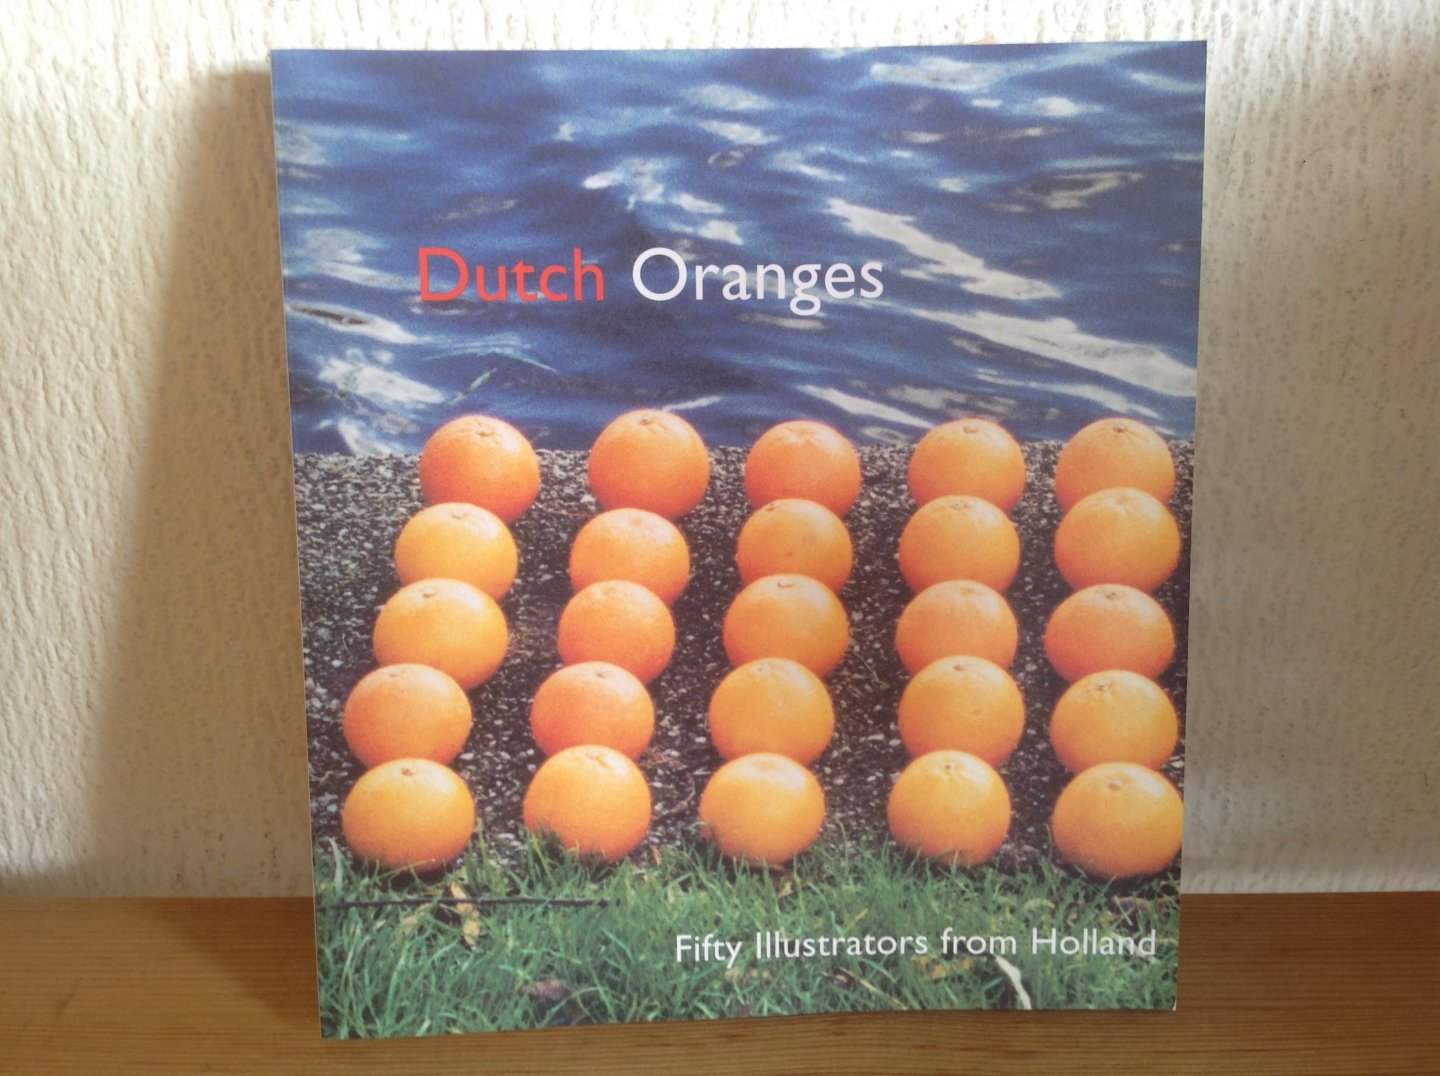 Vrooland-Lob, T. - Dutch Oranges / fifty illustrators from Holland